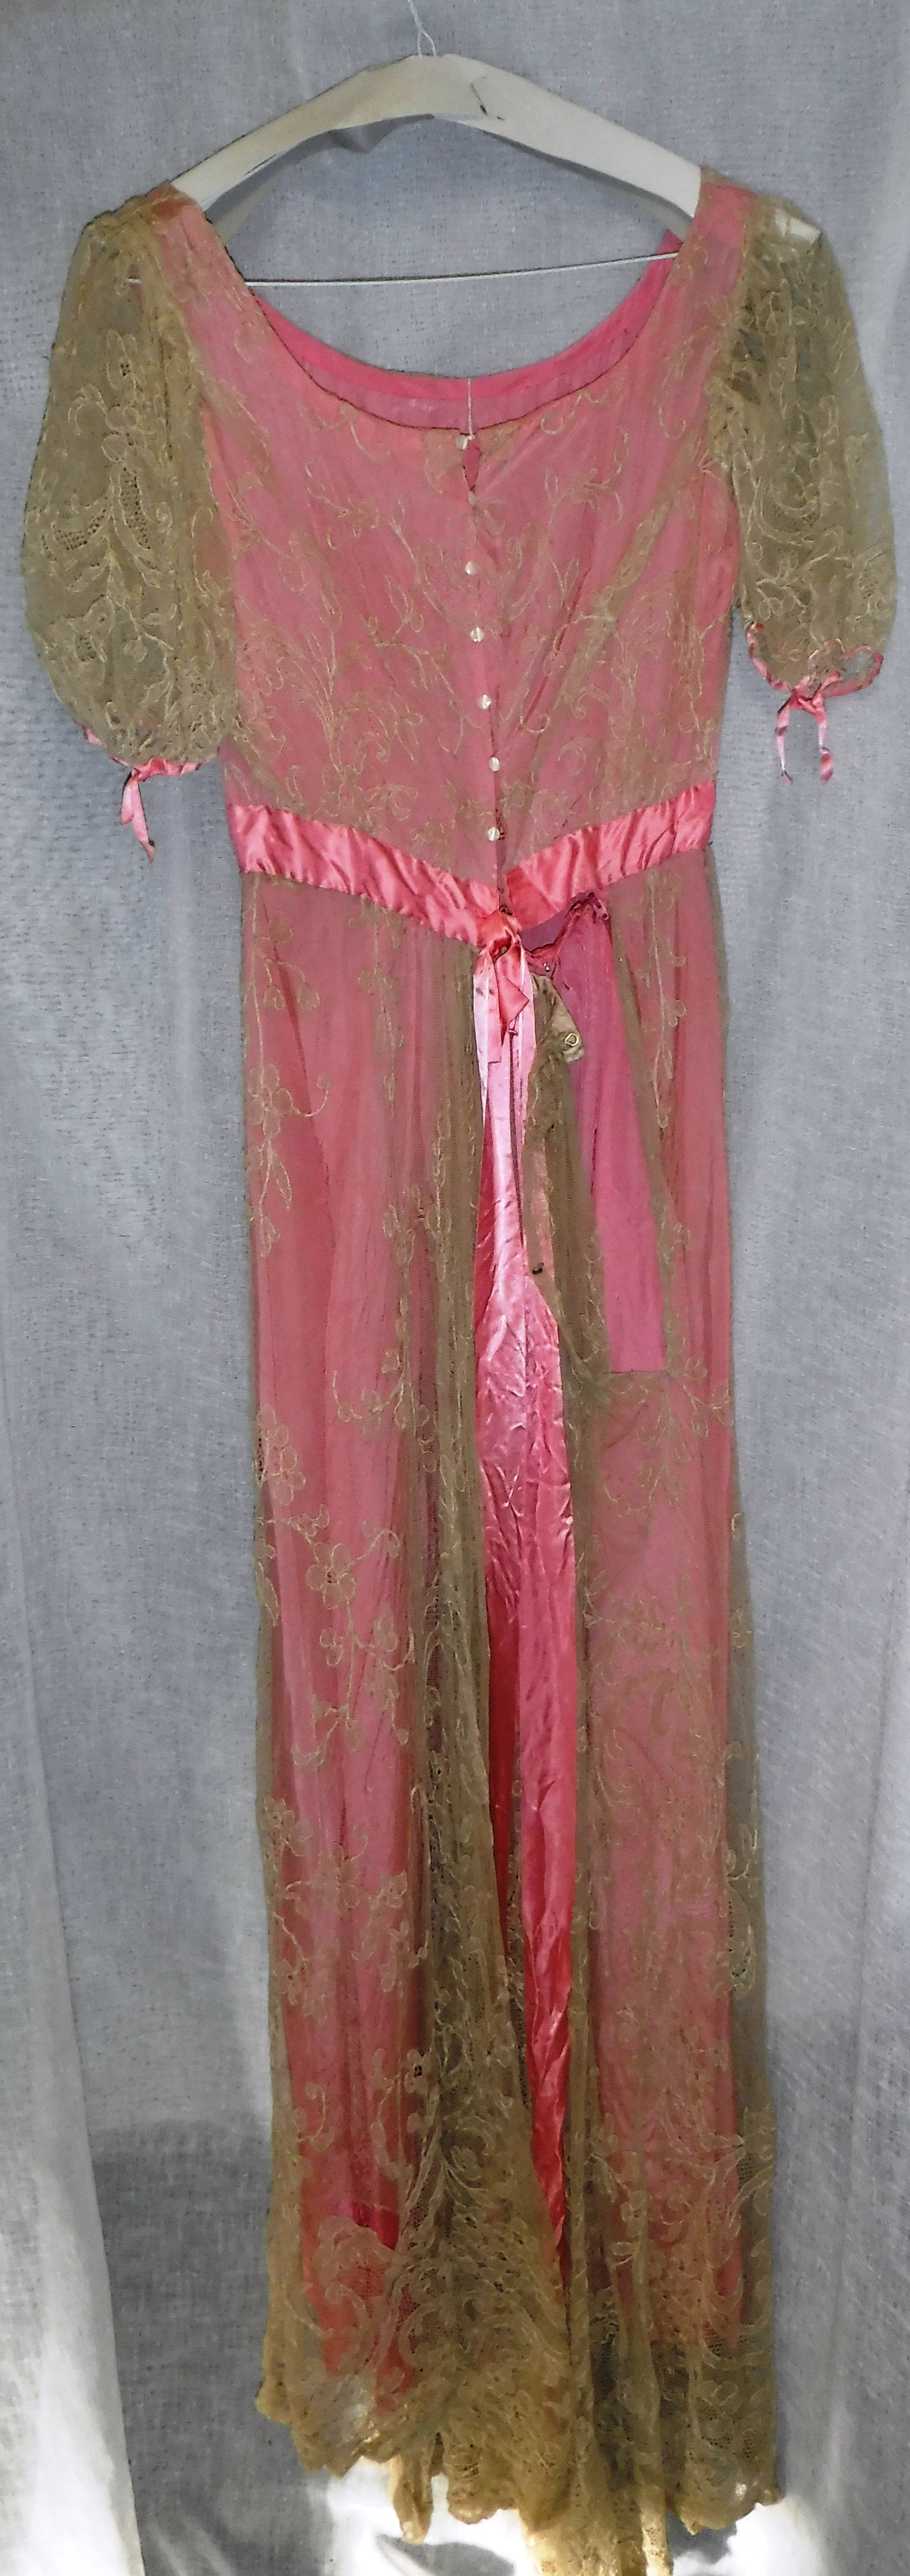 A VINTAGE EDWARDIAN STYLE NOTTINGHAM LACE DRESS, over a pink under slip - Image 2 of 4